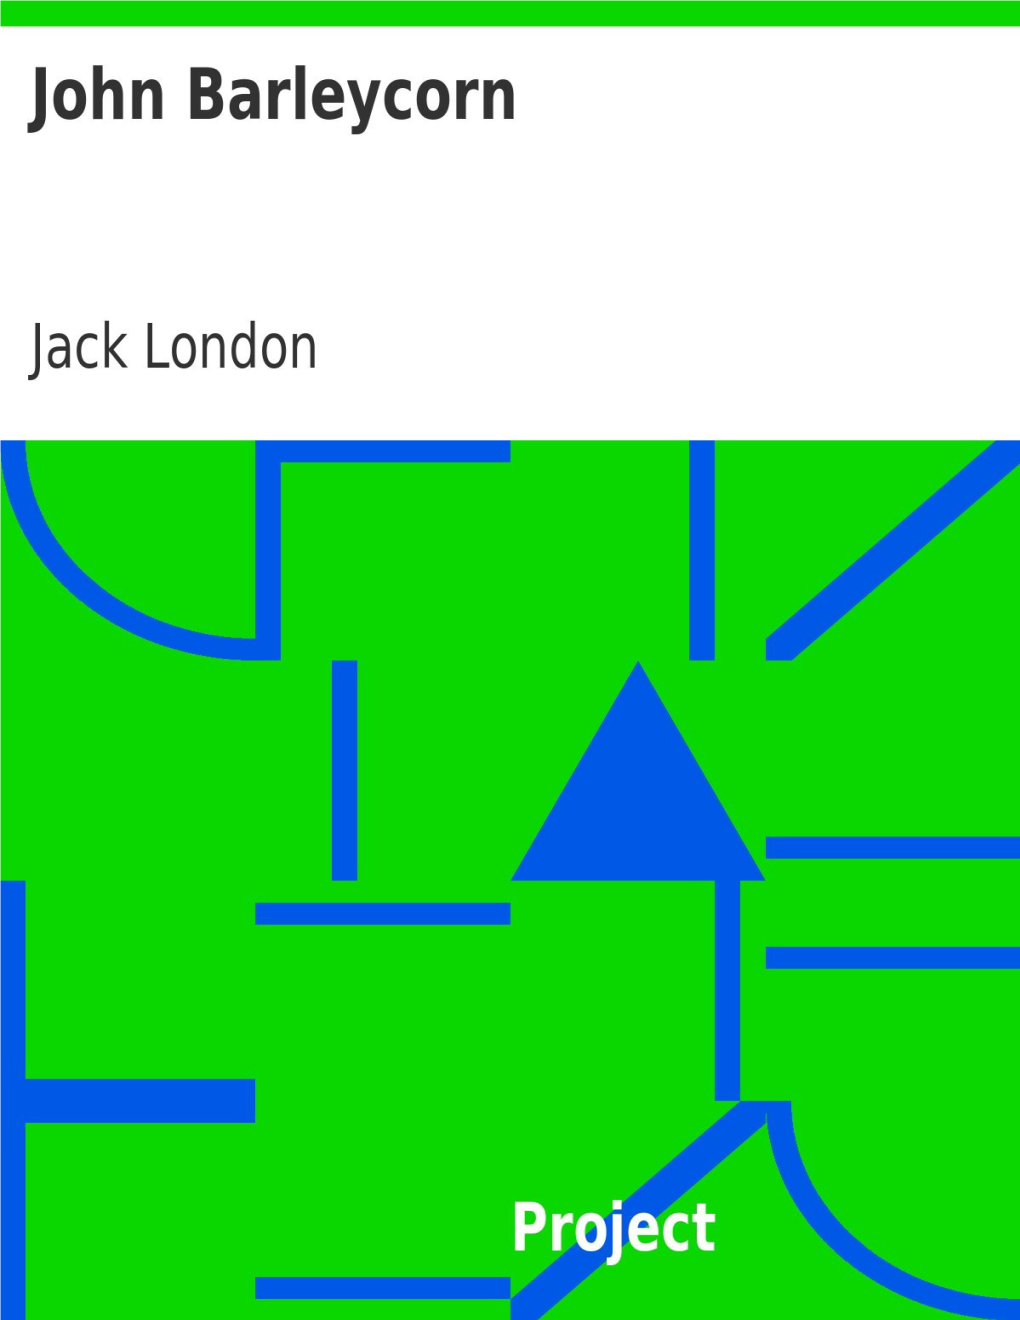 John Barleycorn, by Jack London